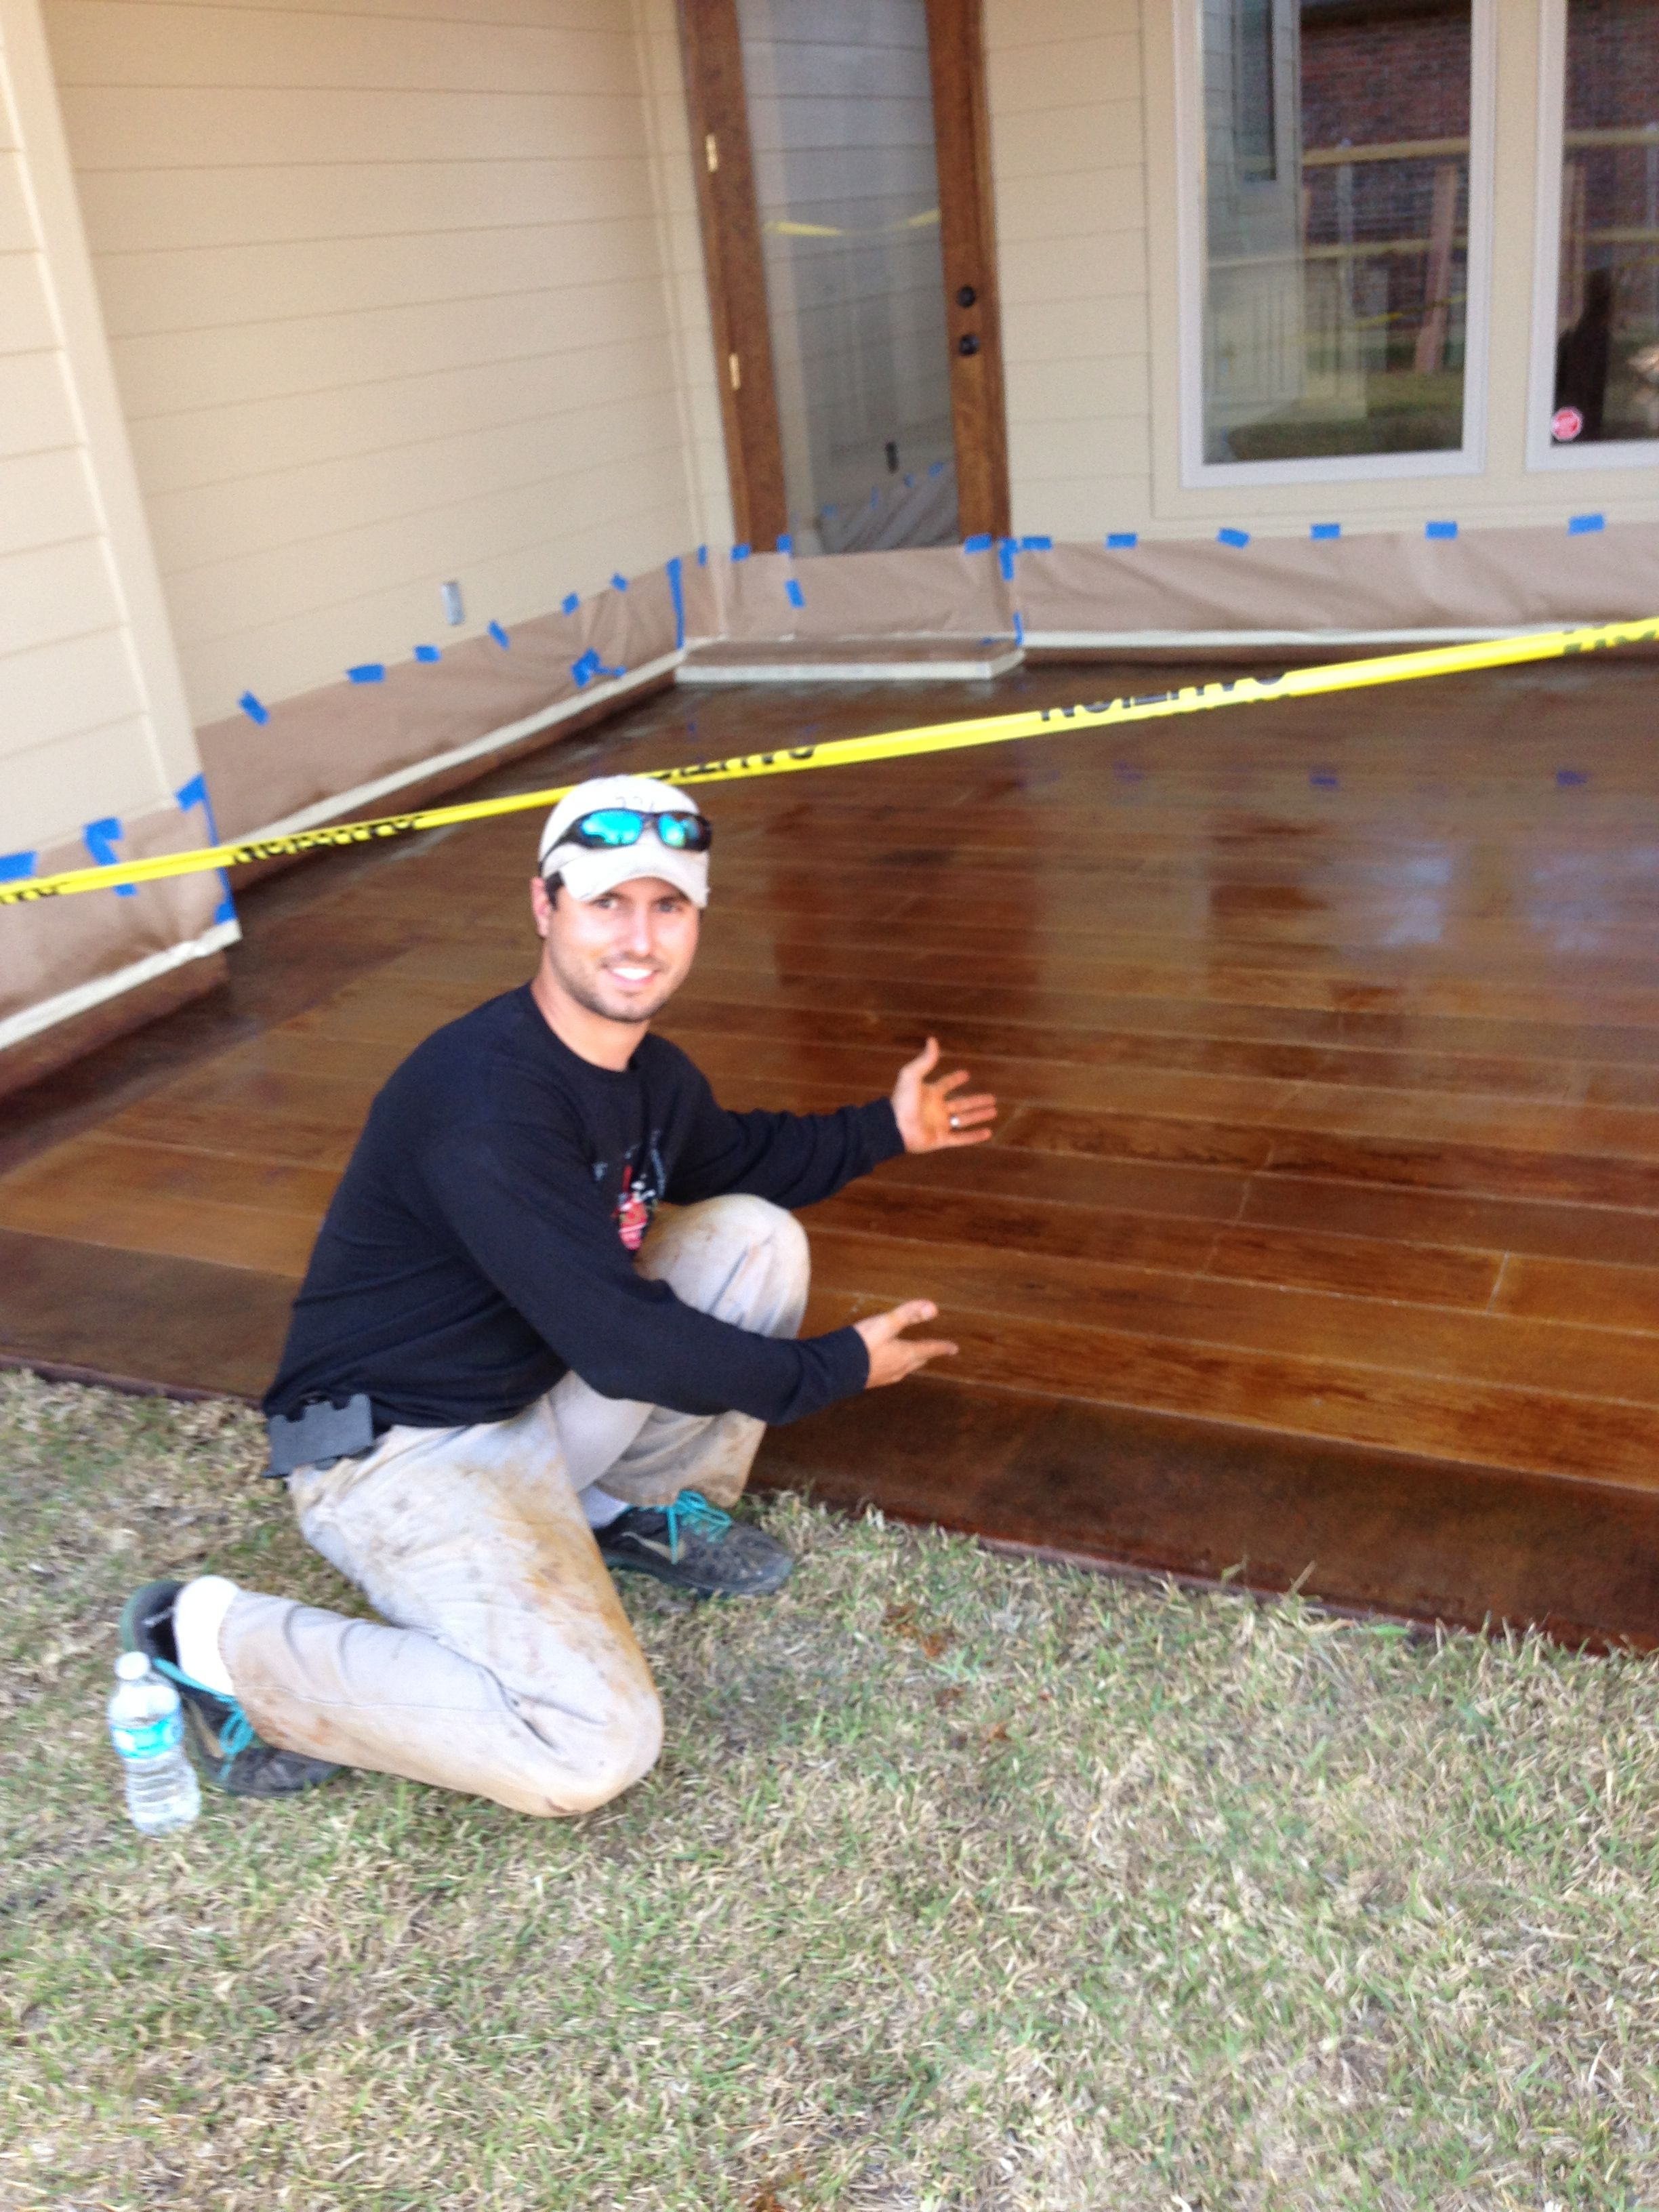 Wood Planks For Outdoor Concrete Patio Surecrete Products regarding dimensions 2448 X 3264